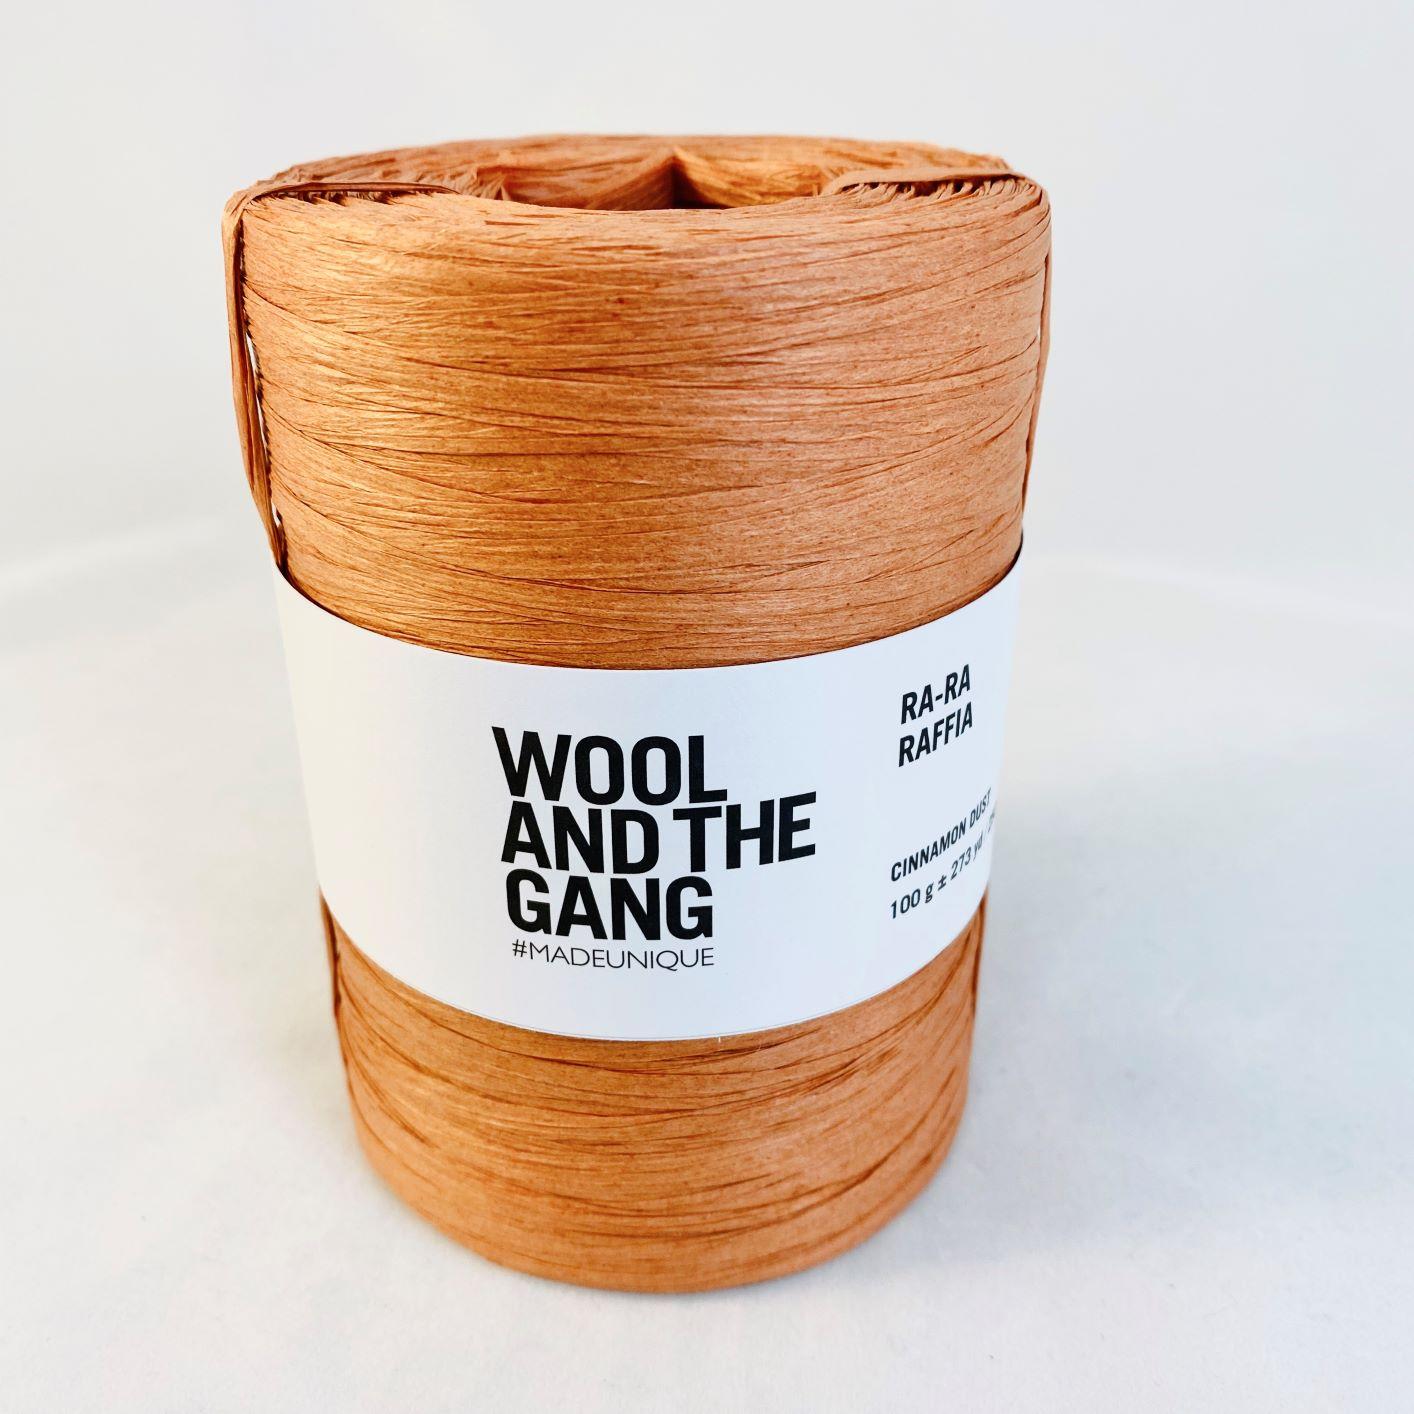 Wool and The Gang Ra-Ra Raffia - Dune Green